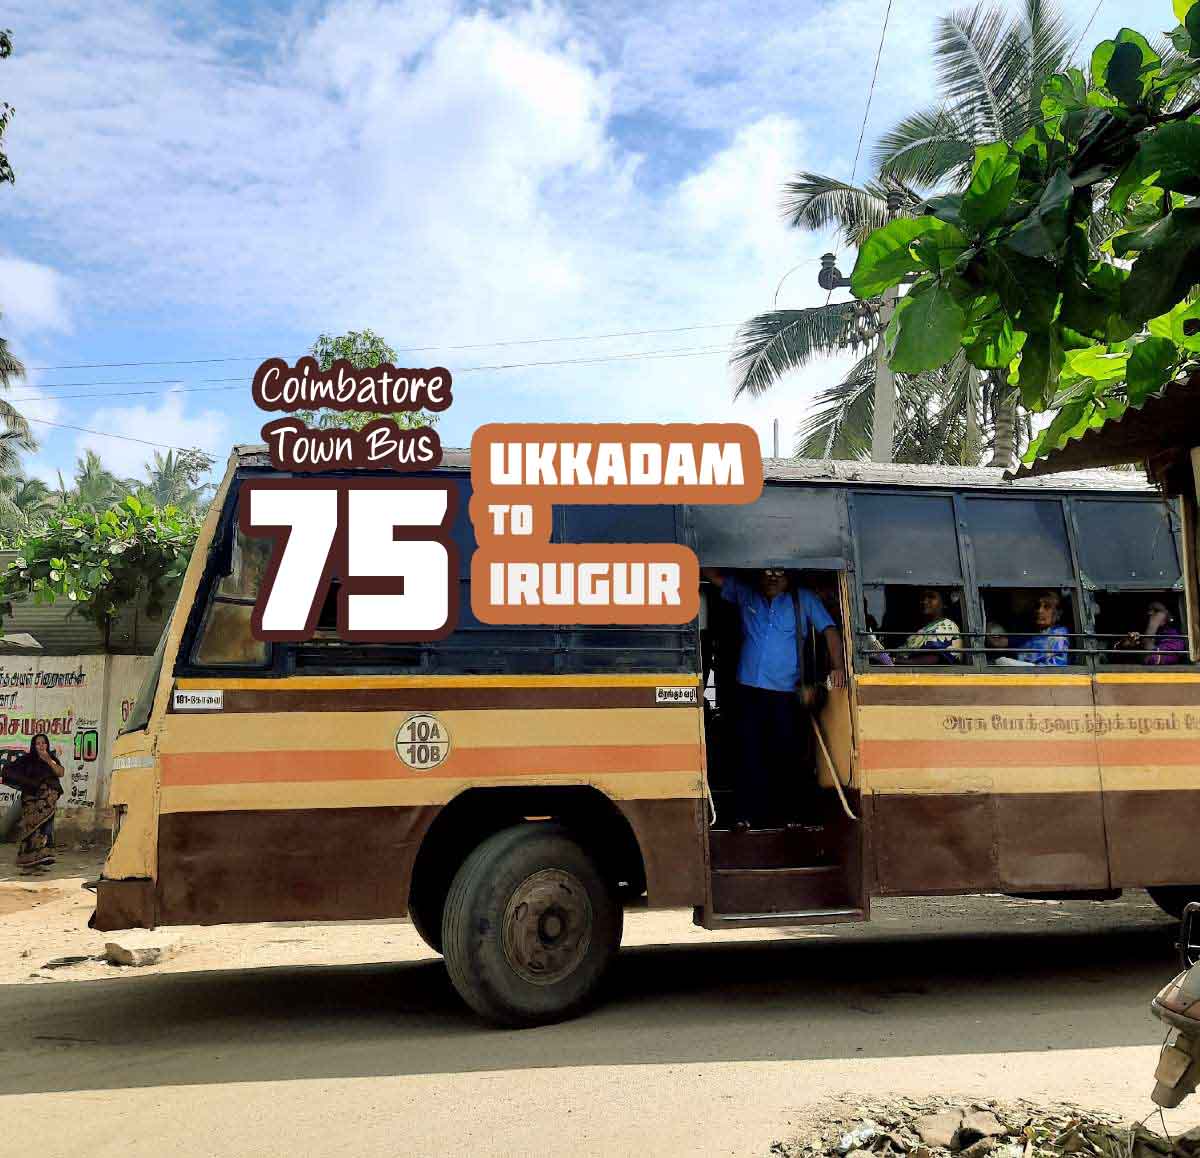 Coimbatore Town Bus Route 75 Ukkadam To Irugur Bus Timings 